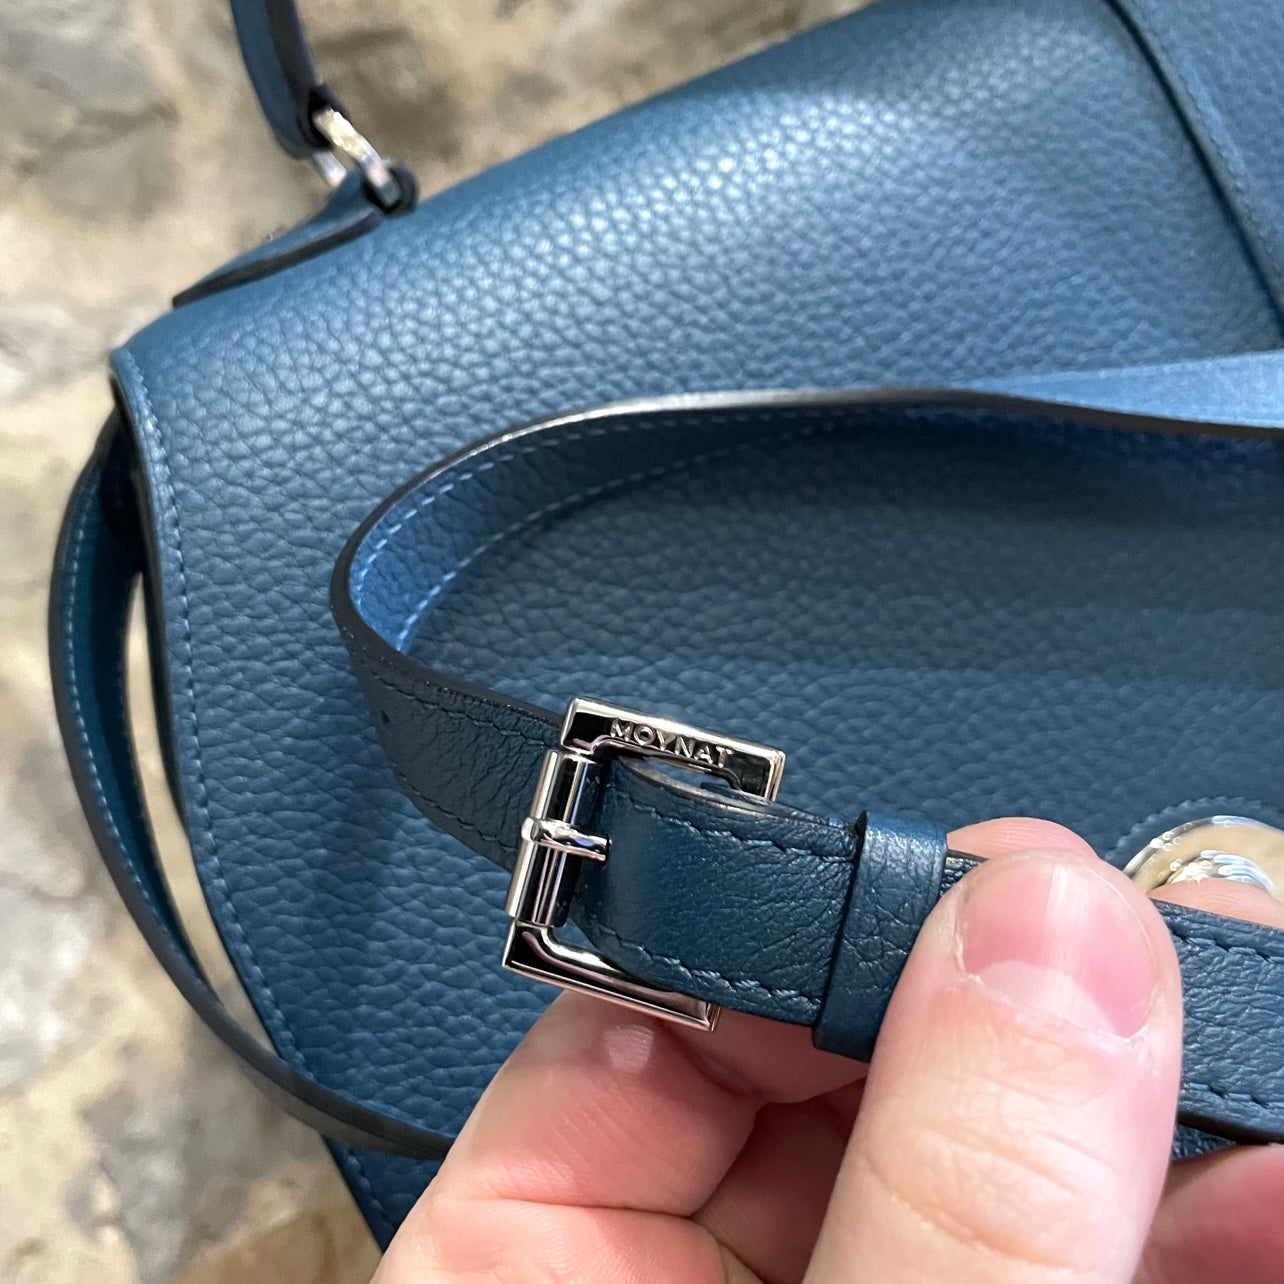 Moynat Pétite Réjane Handbag in Blue